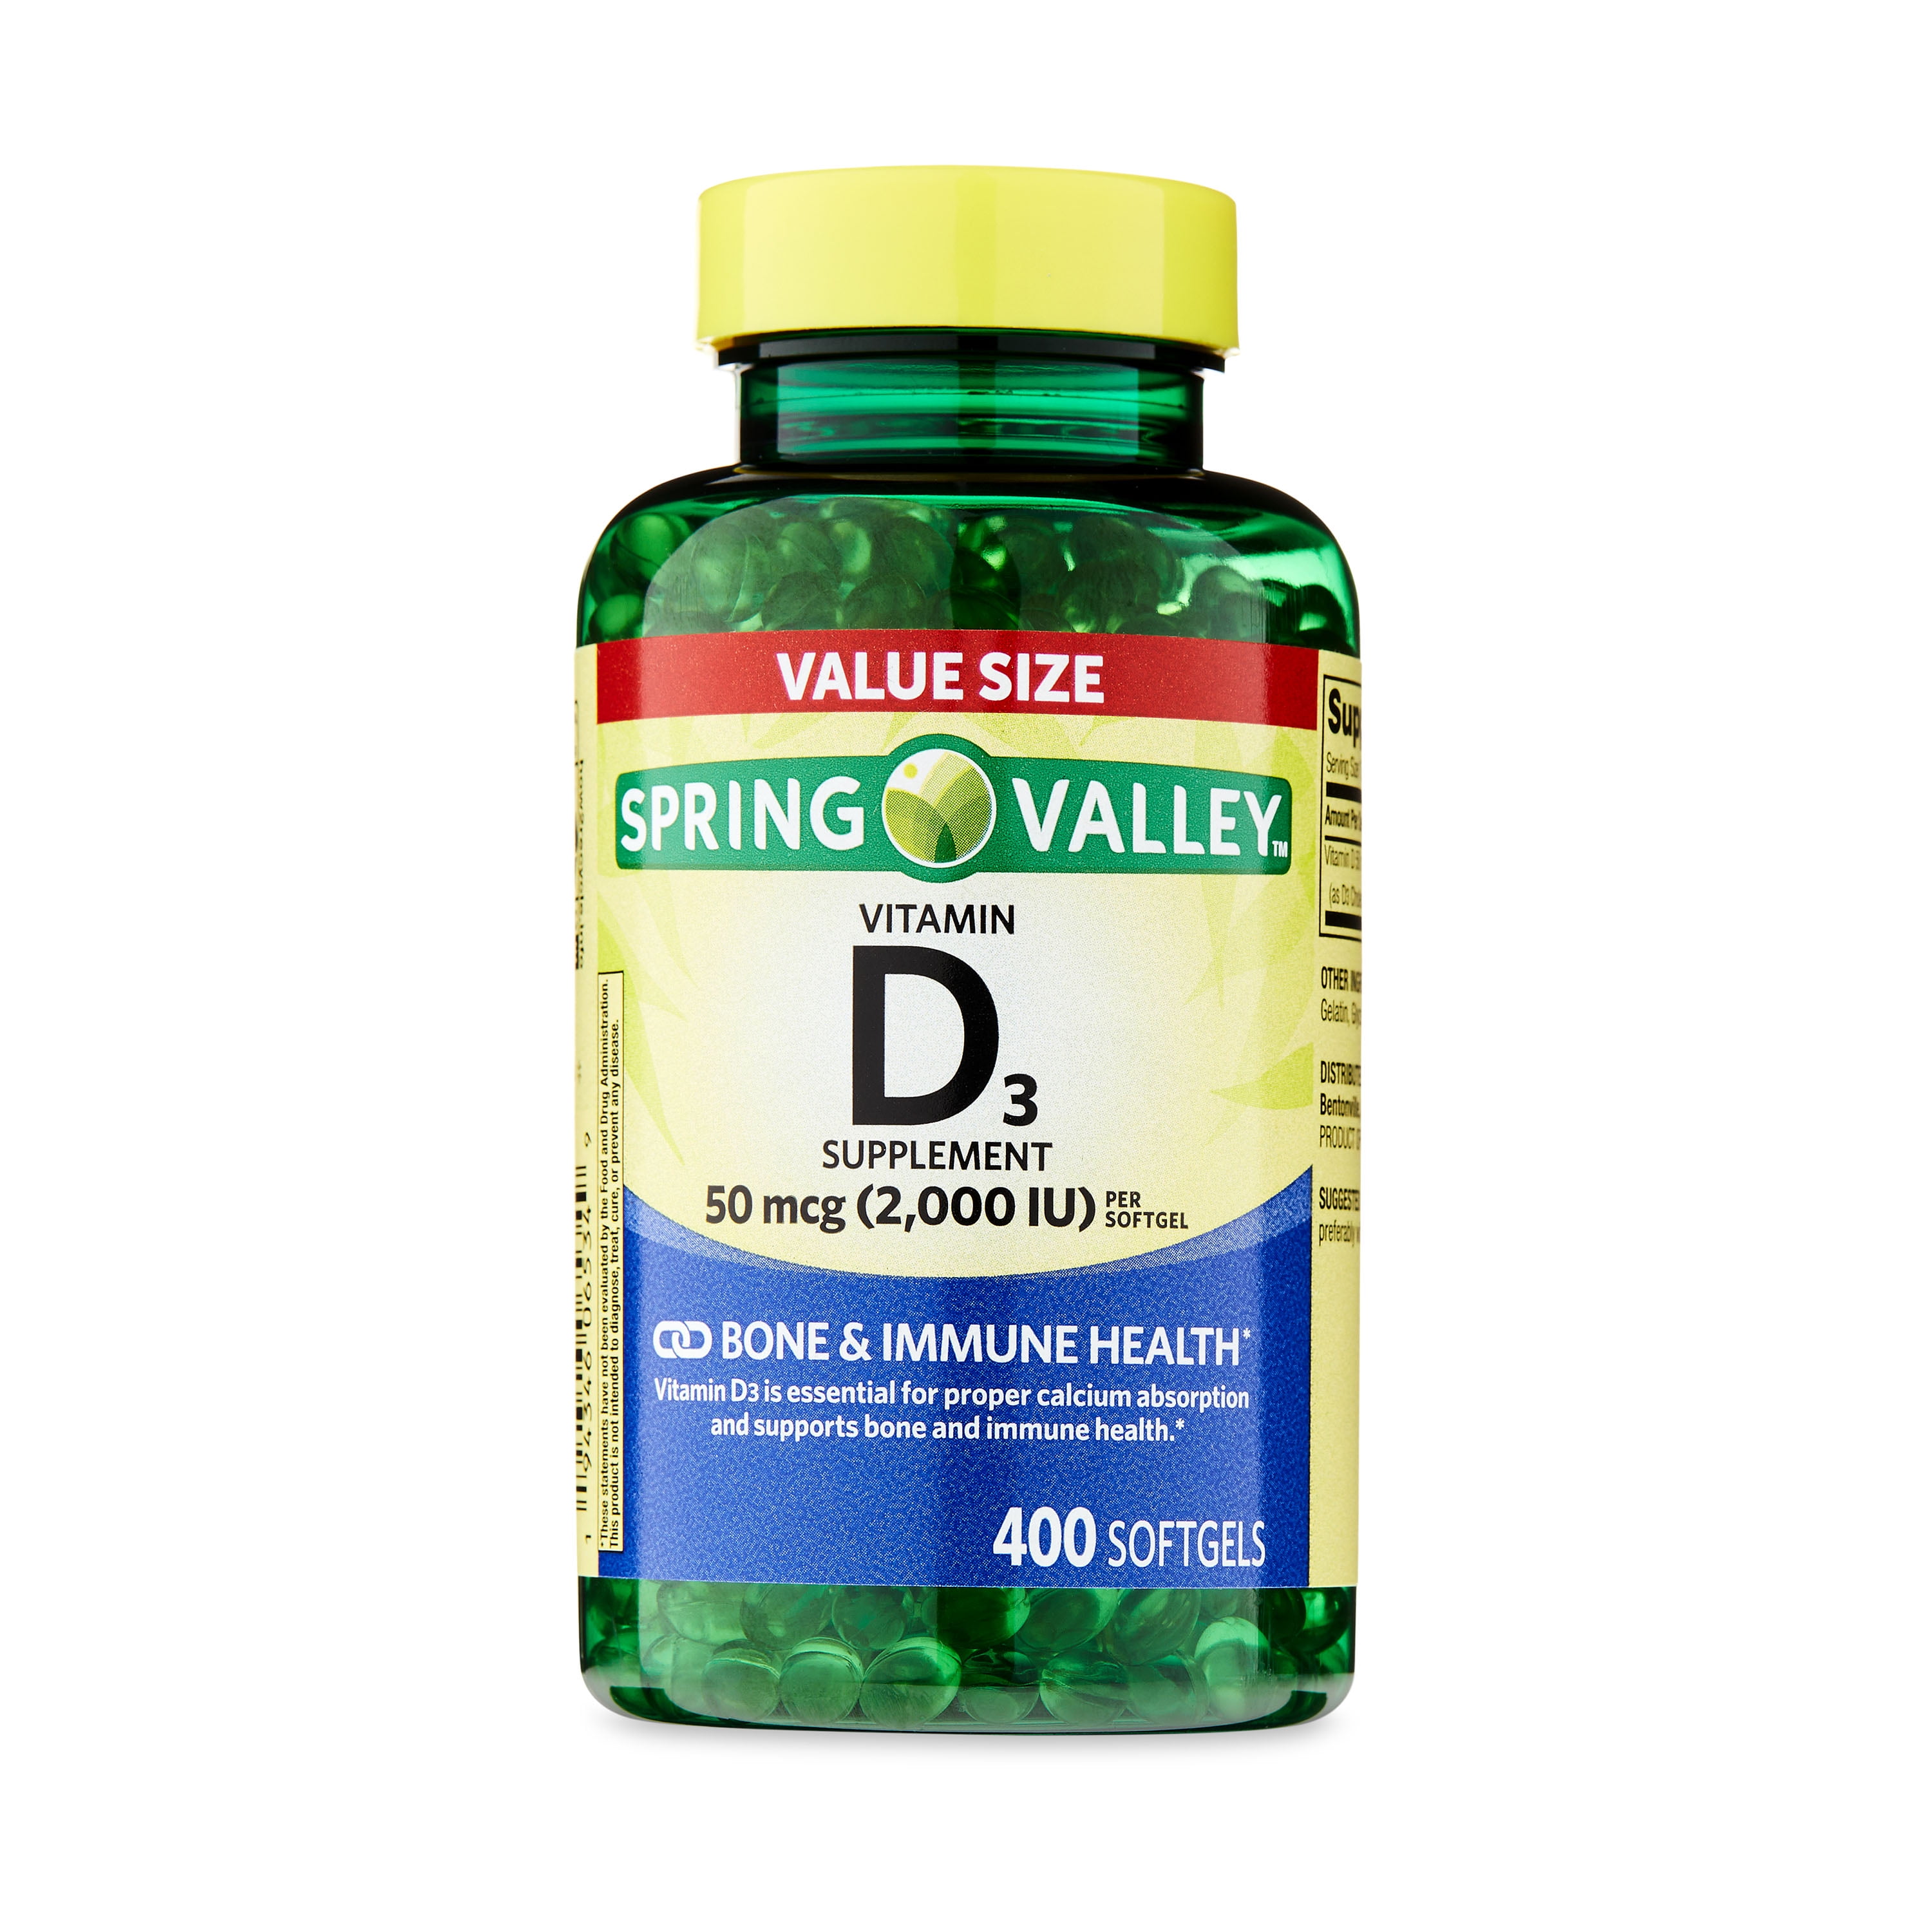 Spring Valley Vitamin D3 Supplement Softgels, 50 Mcg (2,000 IU), 400 ...